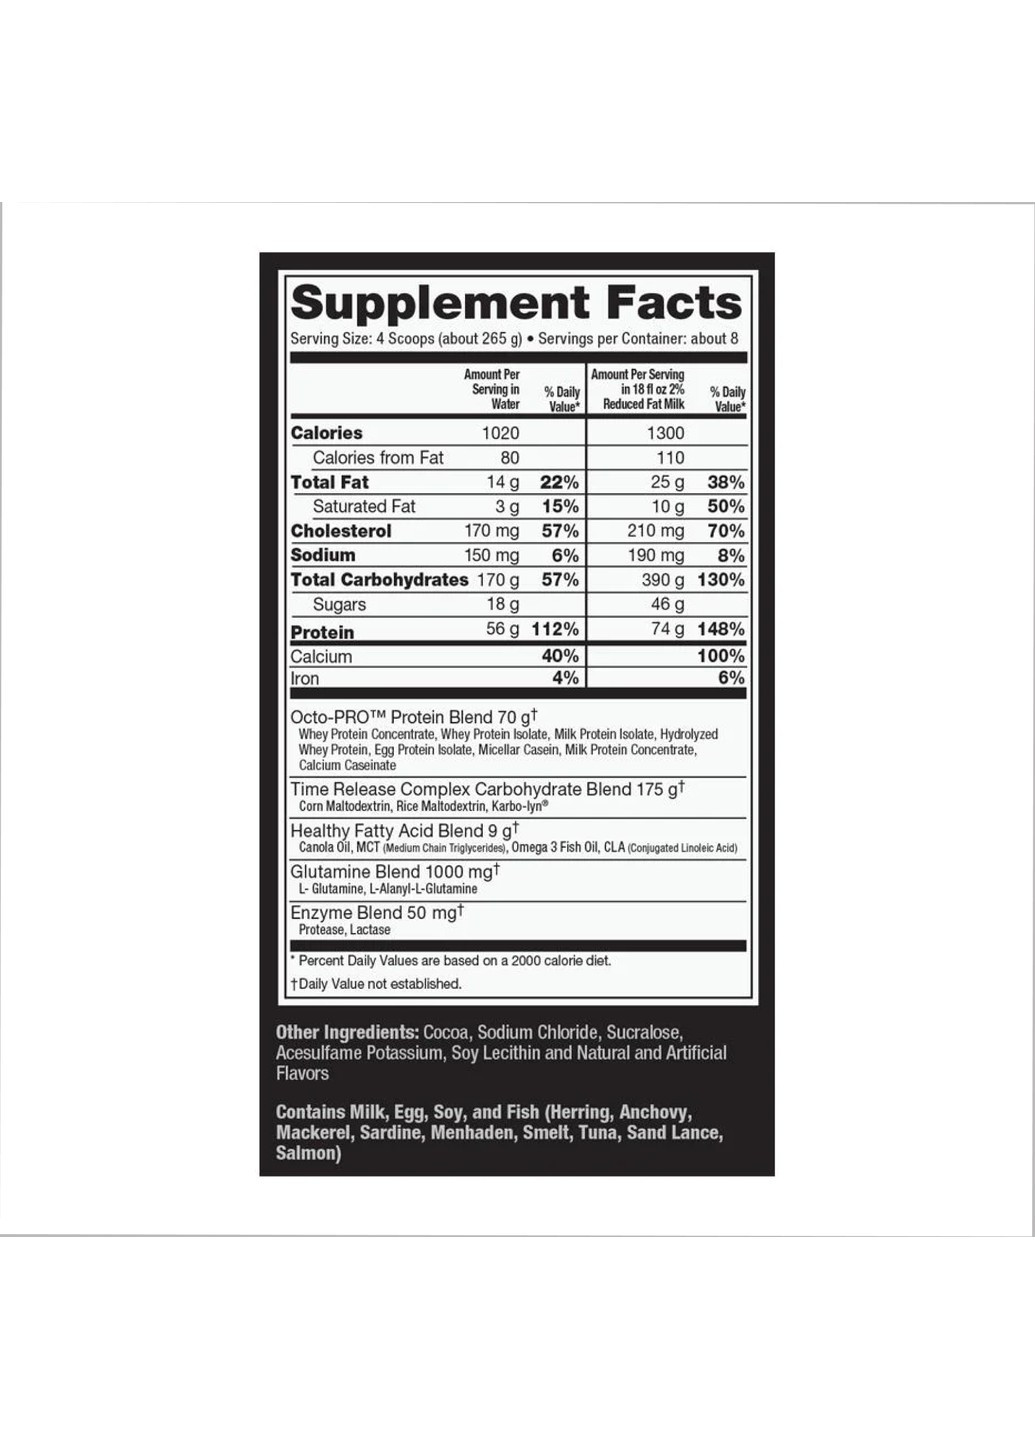 Високобілковий Гейнер Muscle Juice Revolution 2600 - 5040г Ultimate Nutrition (278006981)